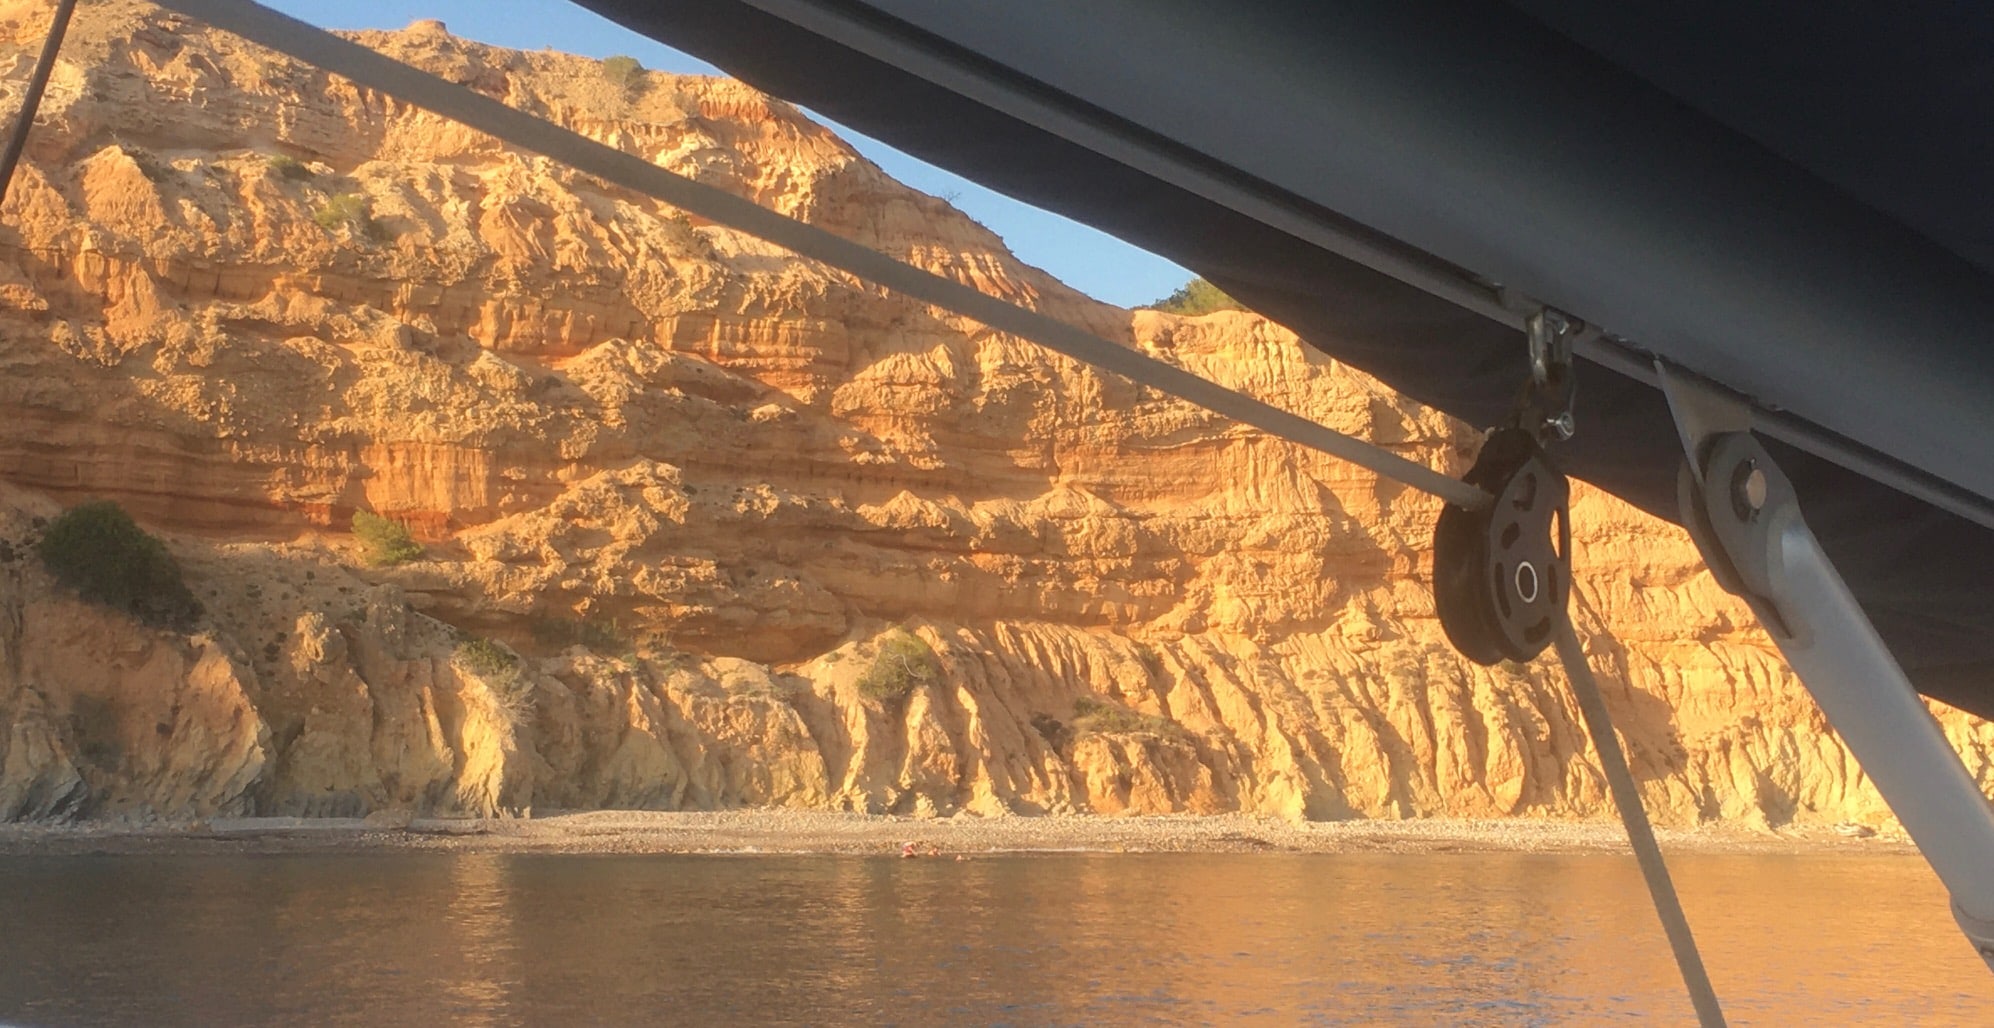 Alquilar catamaran en Ibiza para un día, la cala de Es Torrent